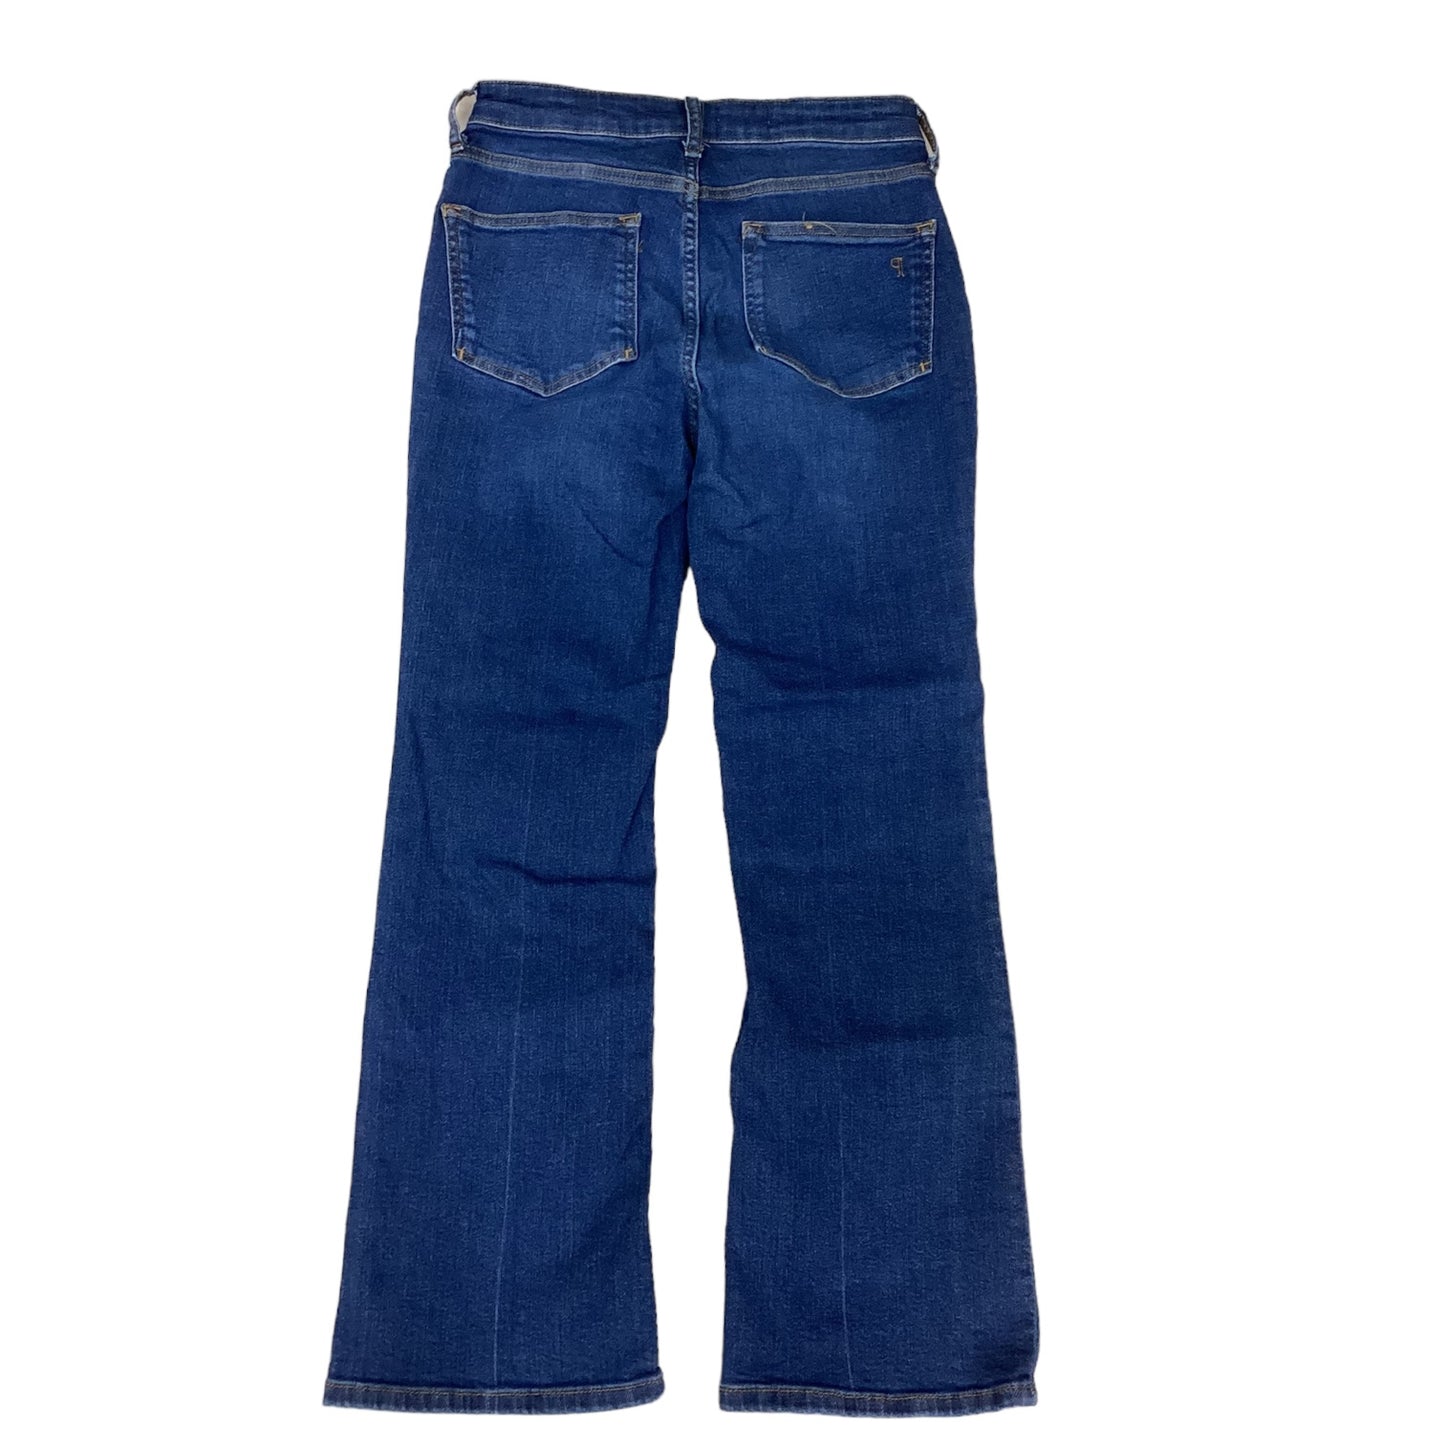 Jeans Designer By Pilcro  Size: 4